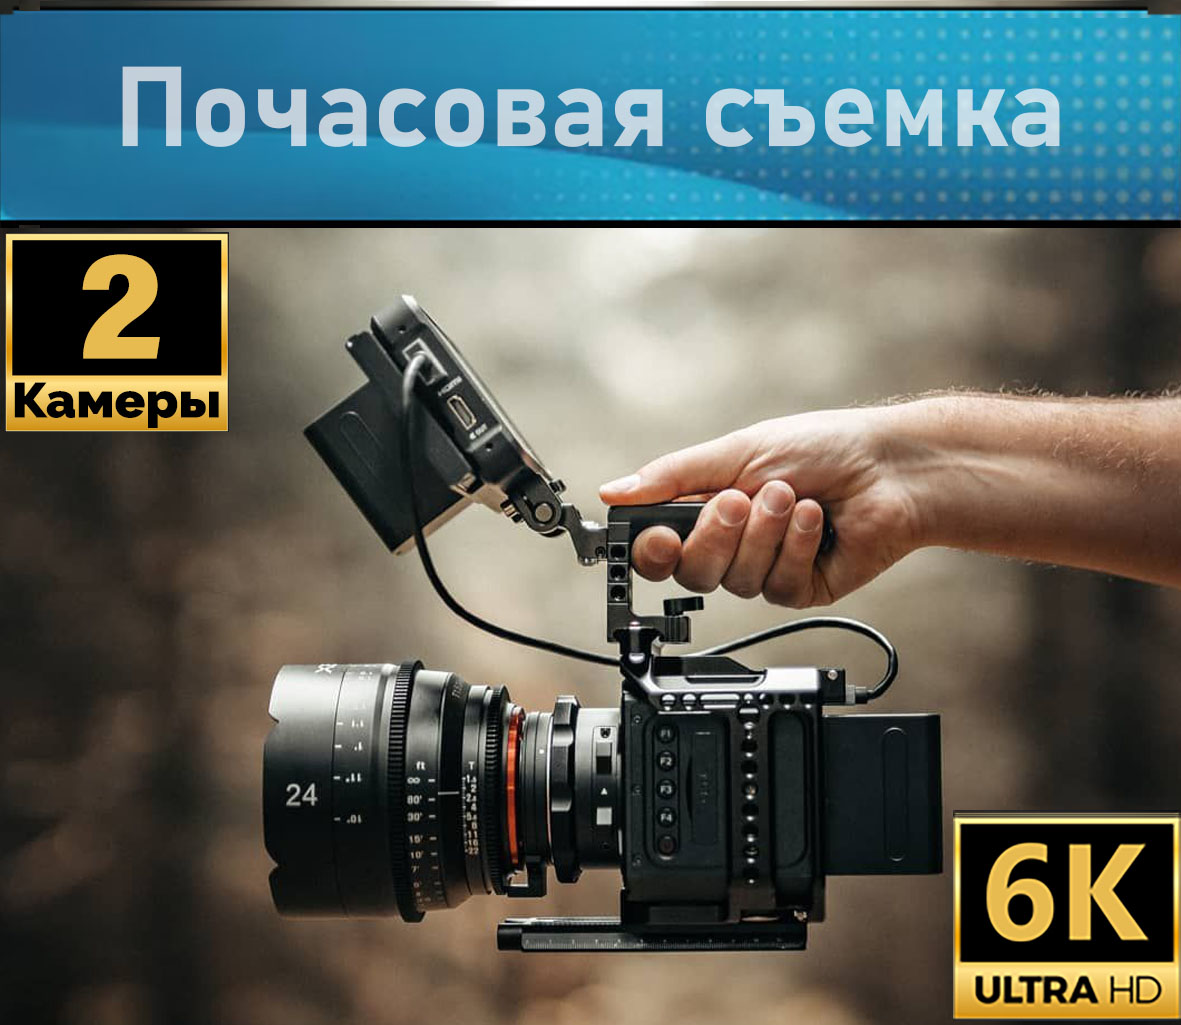 Видеосъемка 6К цена 2 камеры